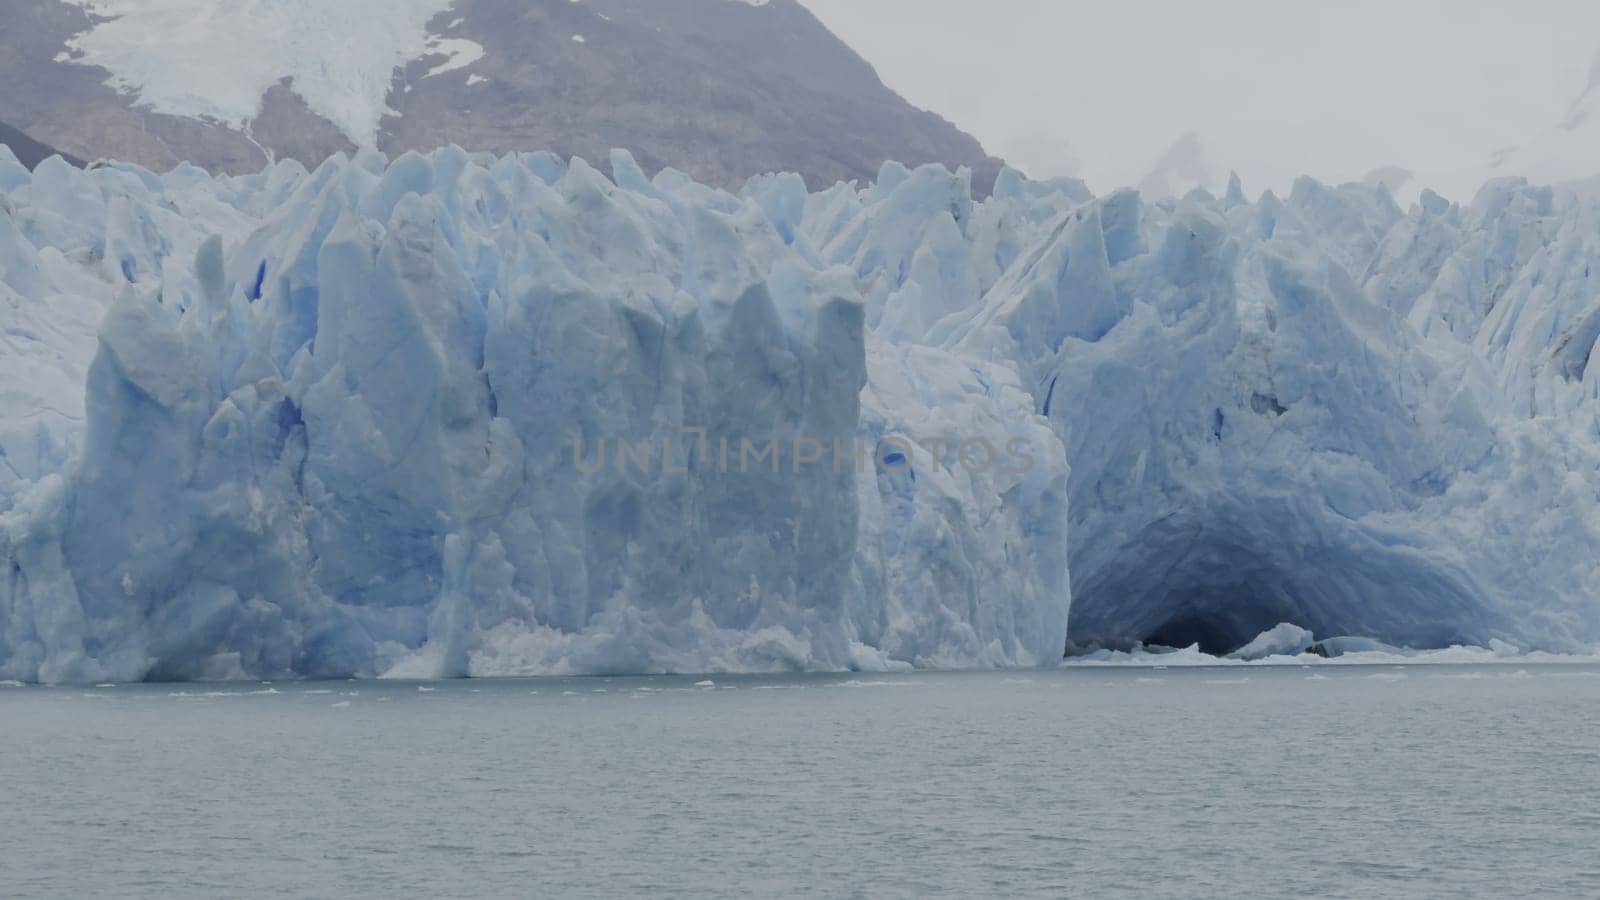 Majestic Perito Moreno Glacier Voyage in Slow Motion by FerradalFCG